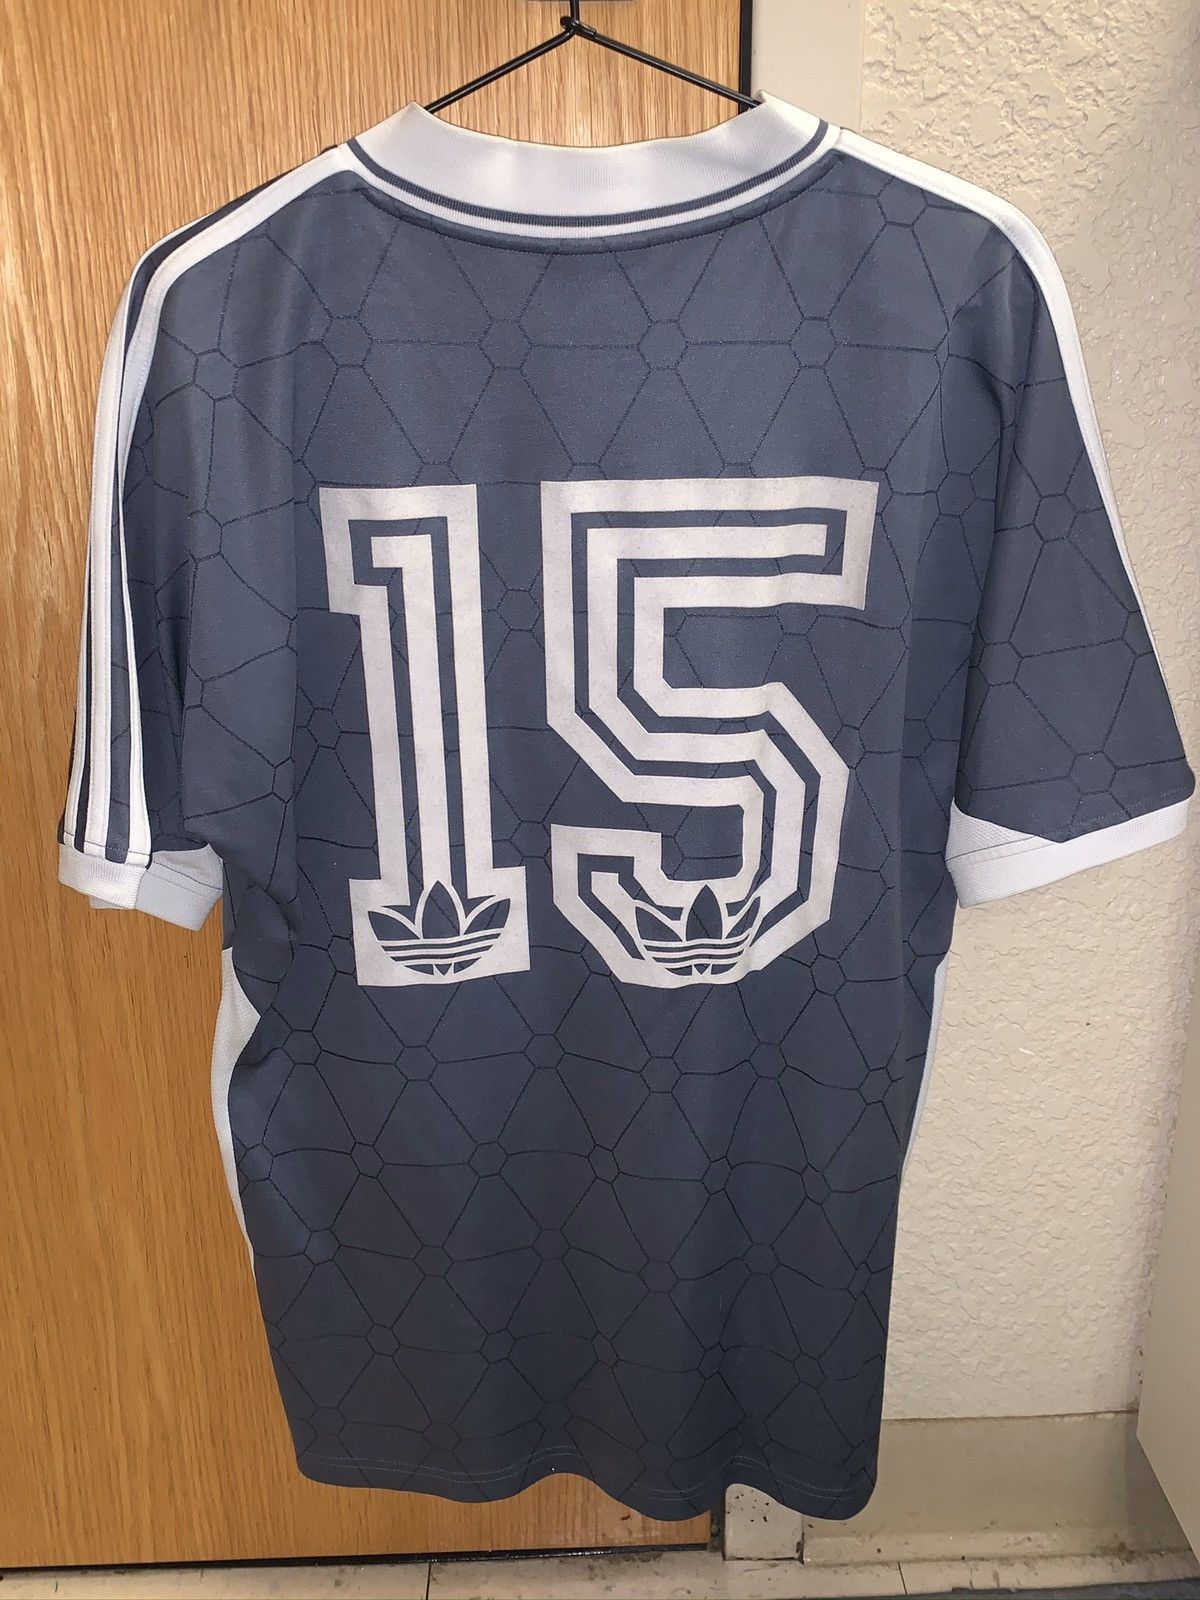 Adidas Palace x Adidas Team Soccer Jersey Shirt Onix SS15 Size US S / EU 44-46 / 1 - 2 Preview